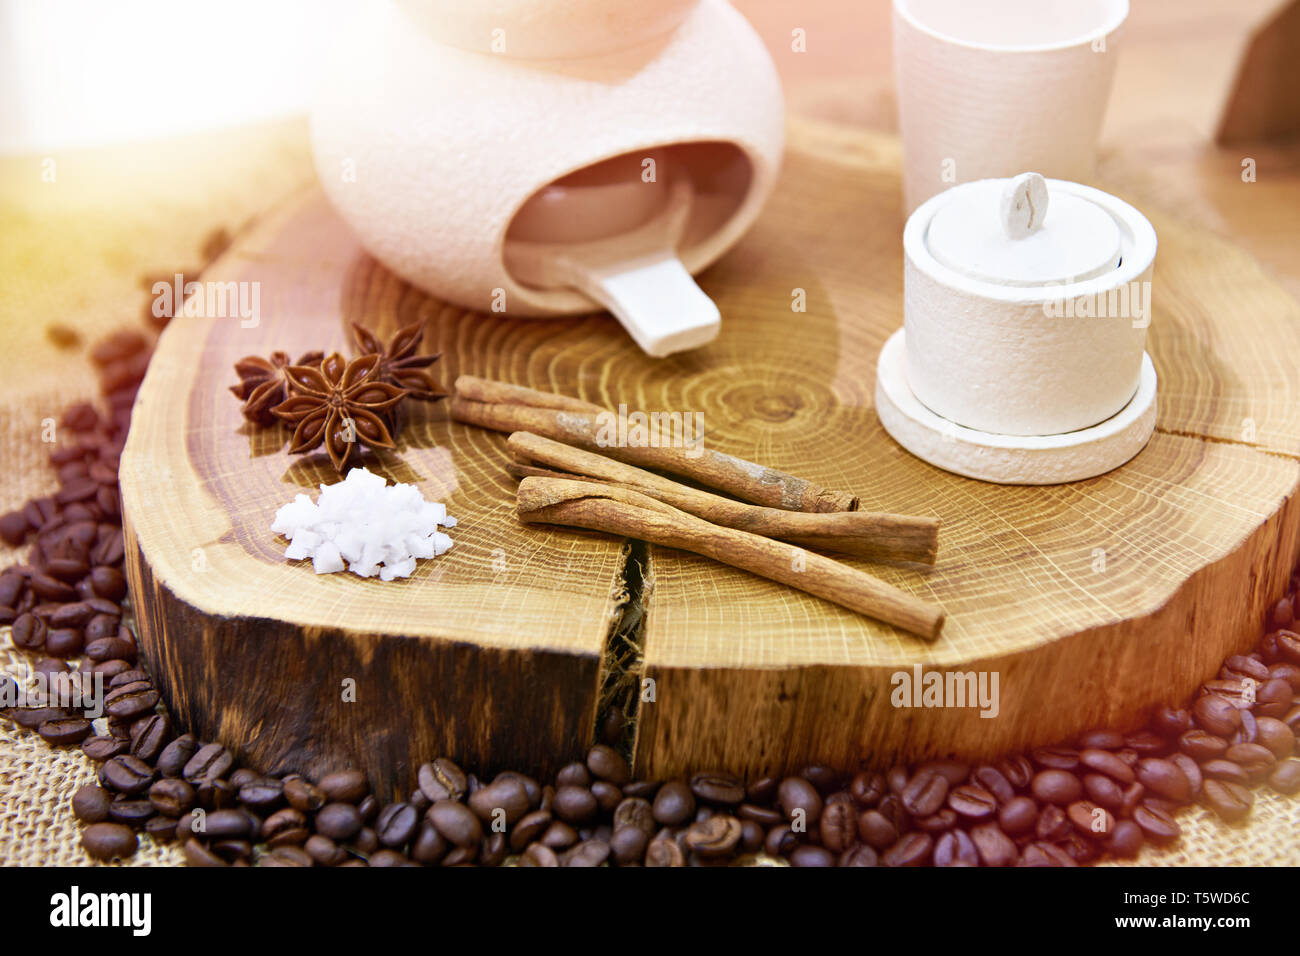 Tea life -Fotos und -Bildmaterial in hoher Auflösung – Alamy